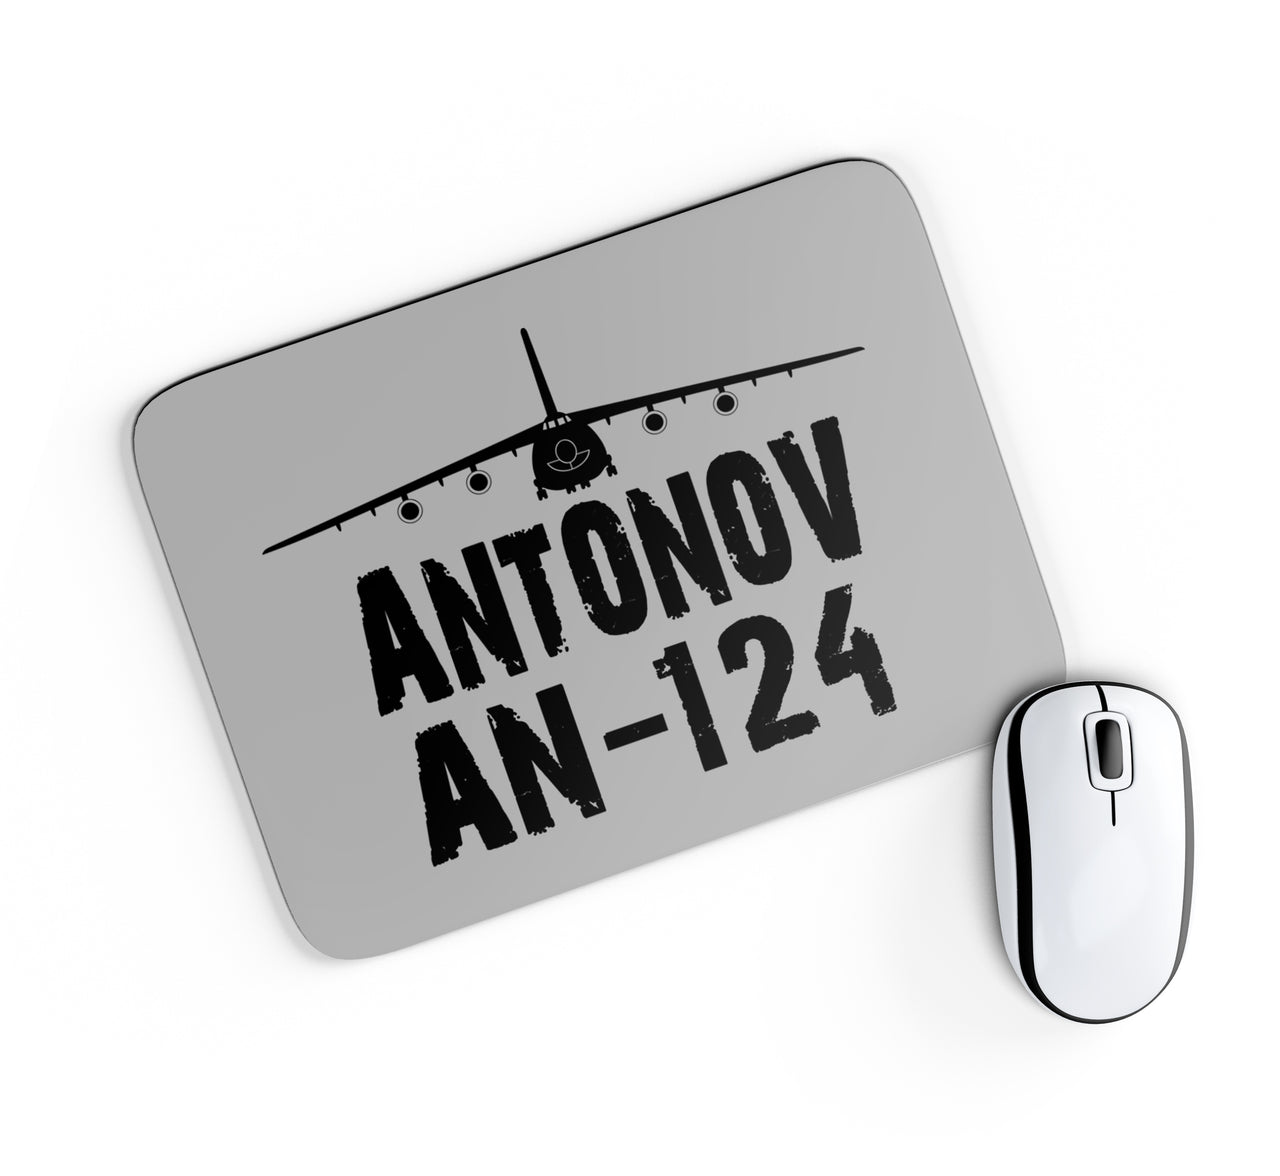 Antonov AN-124 & Plane Designed Mouse Pads